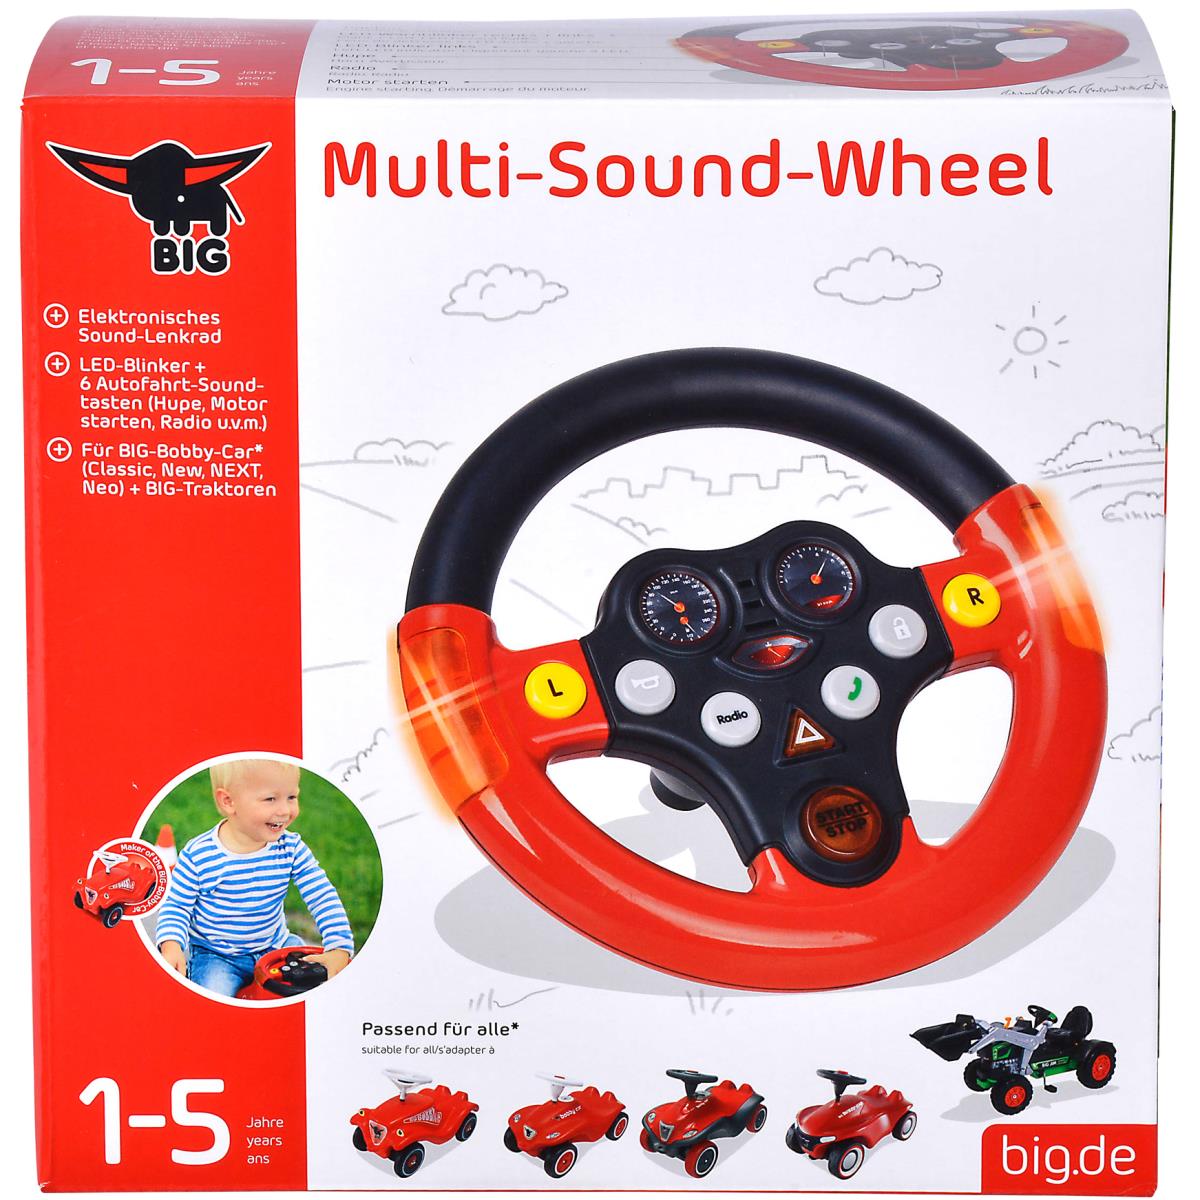 Big: Multi-Sound-Wheel